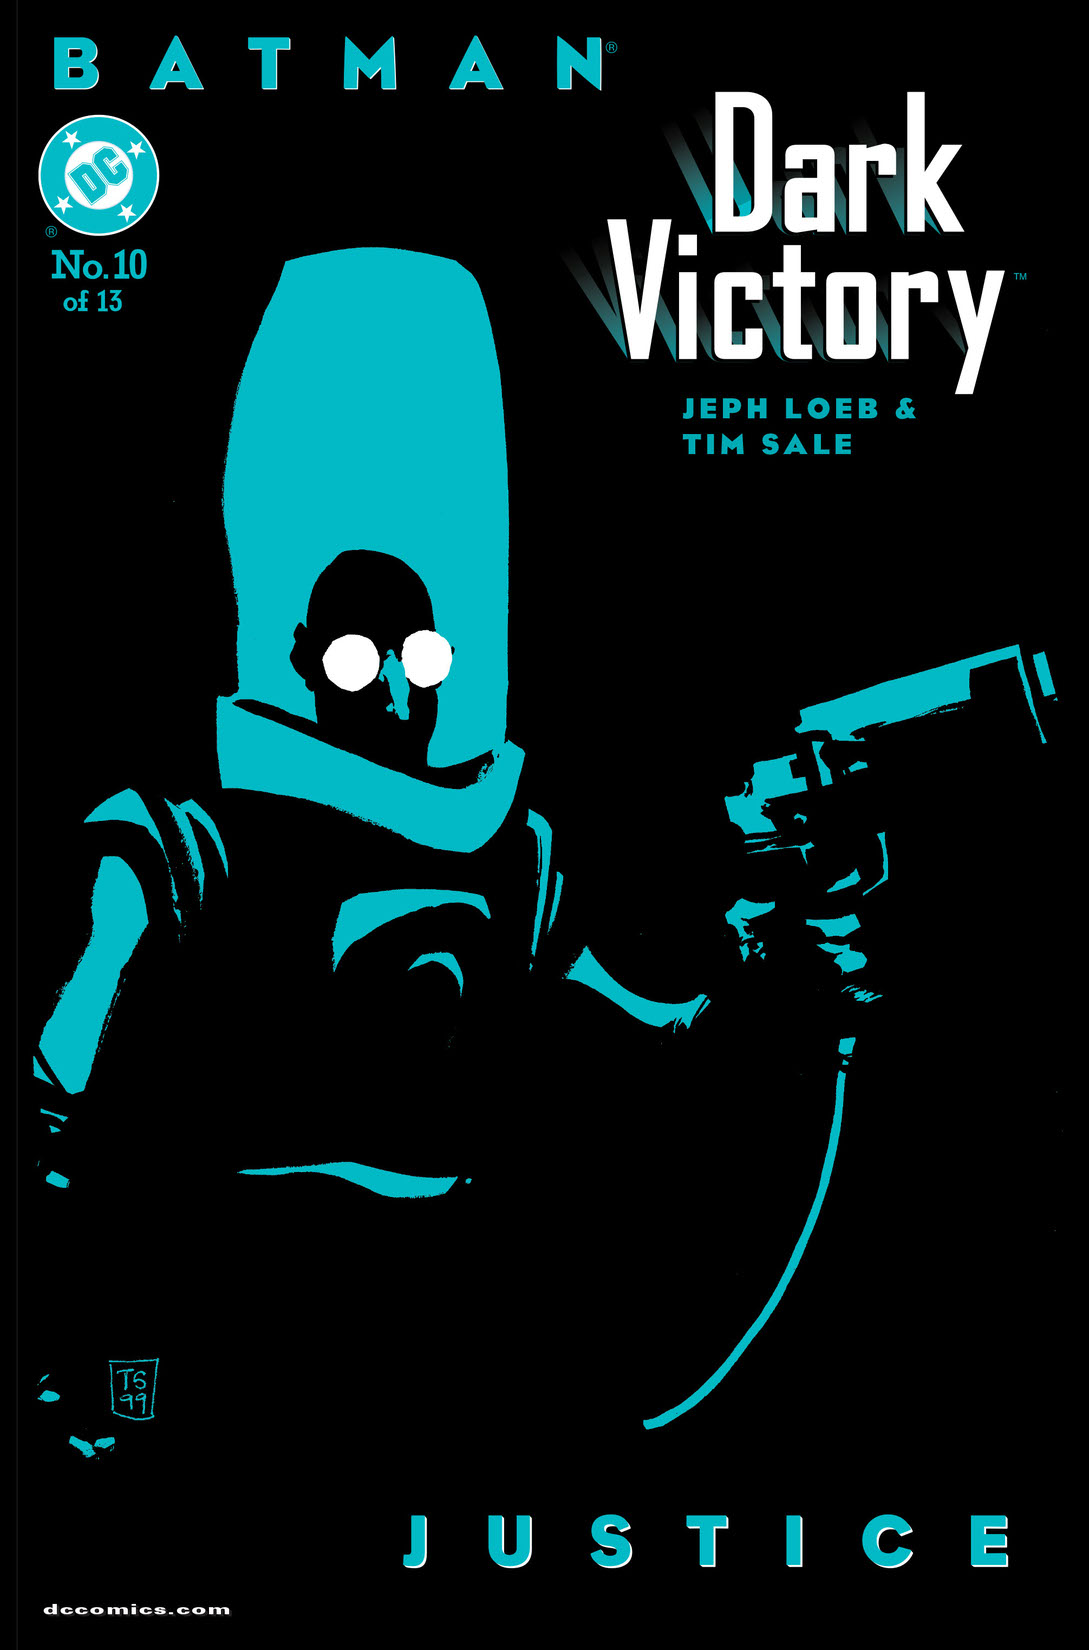 Batman: Dark Victory #10 preview images